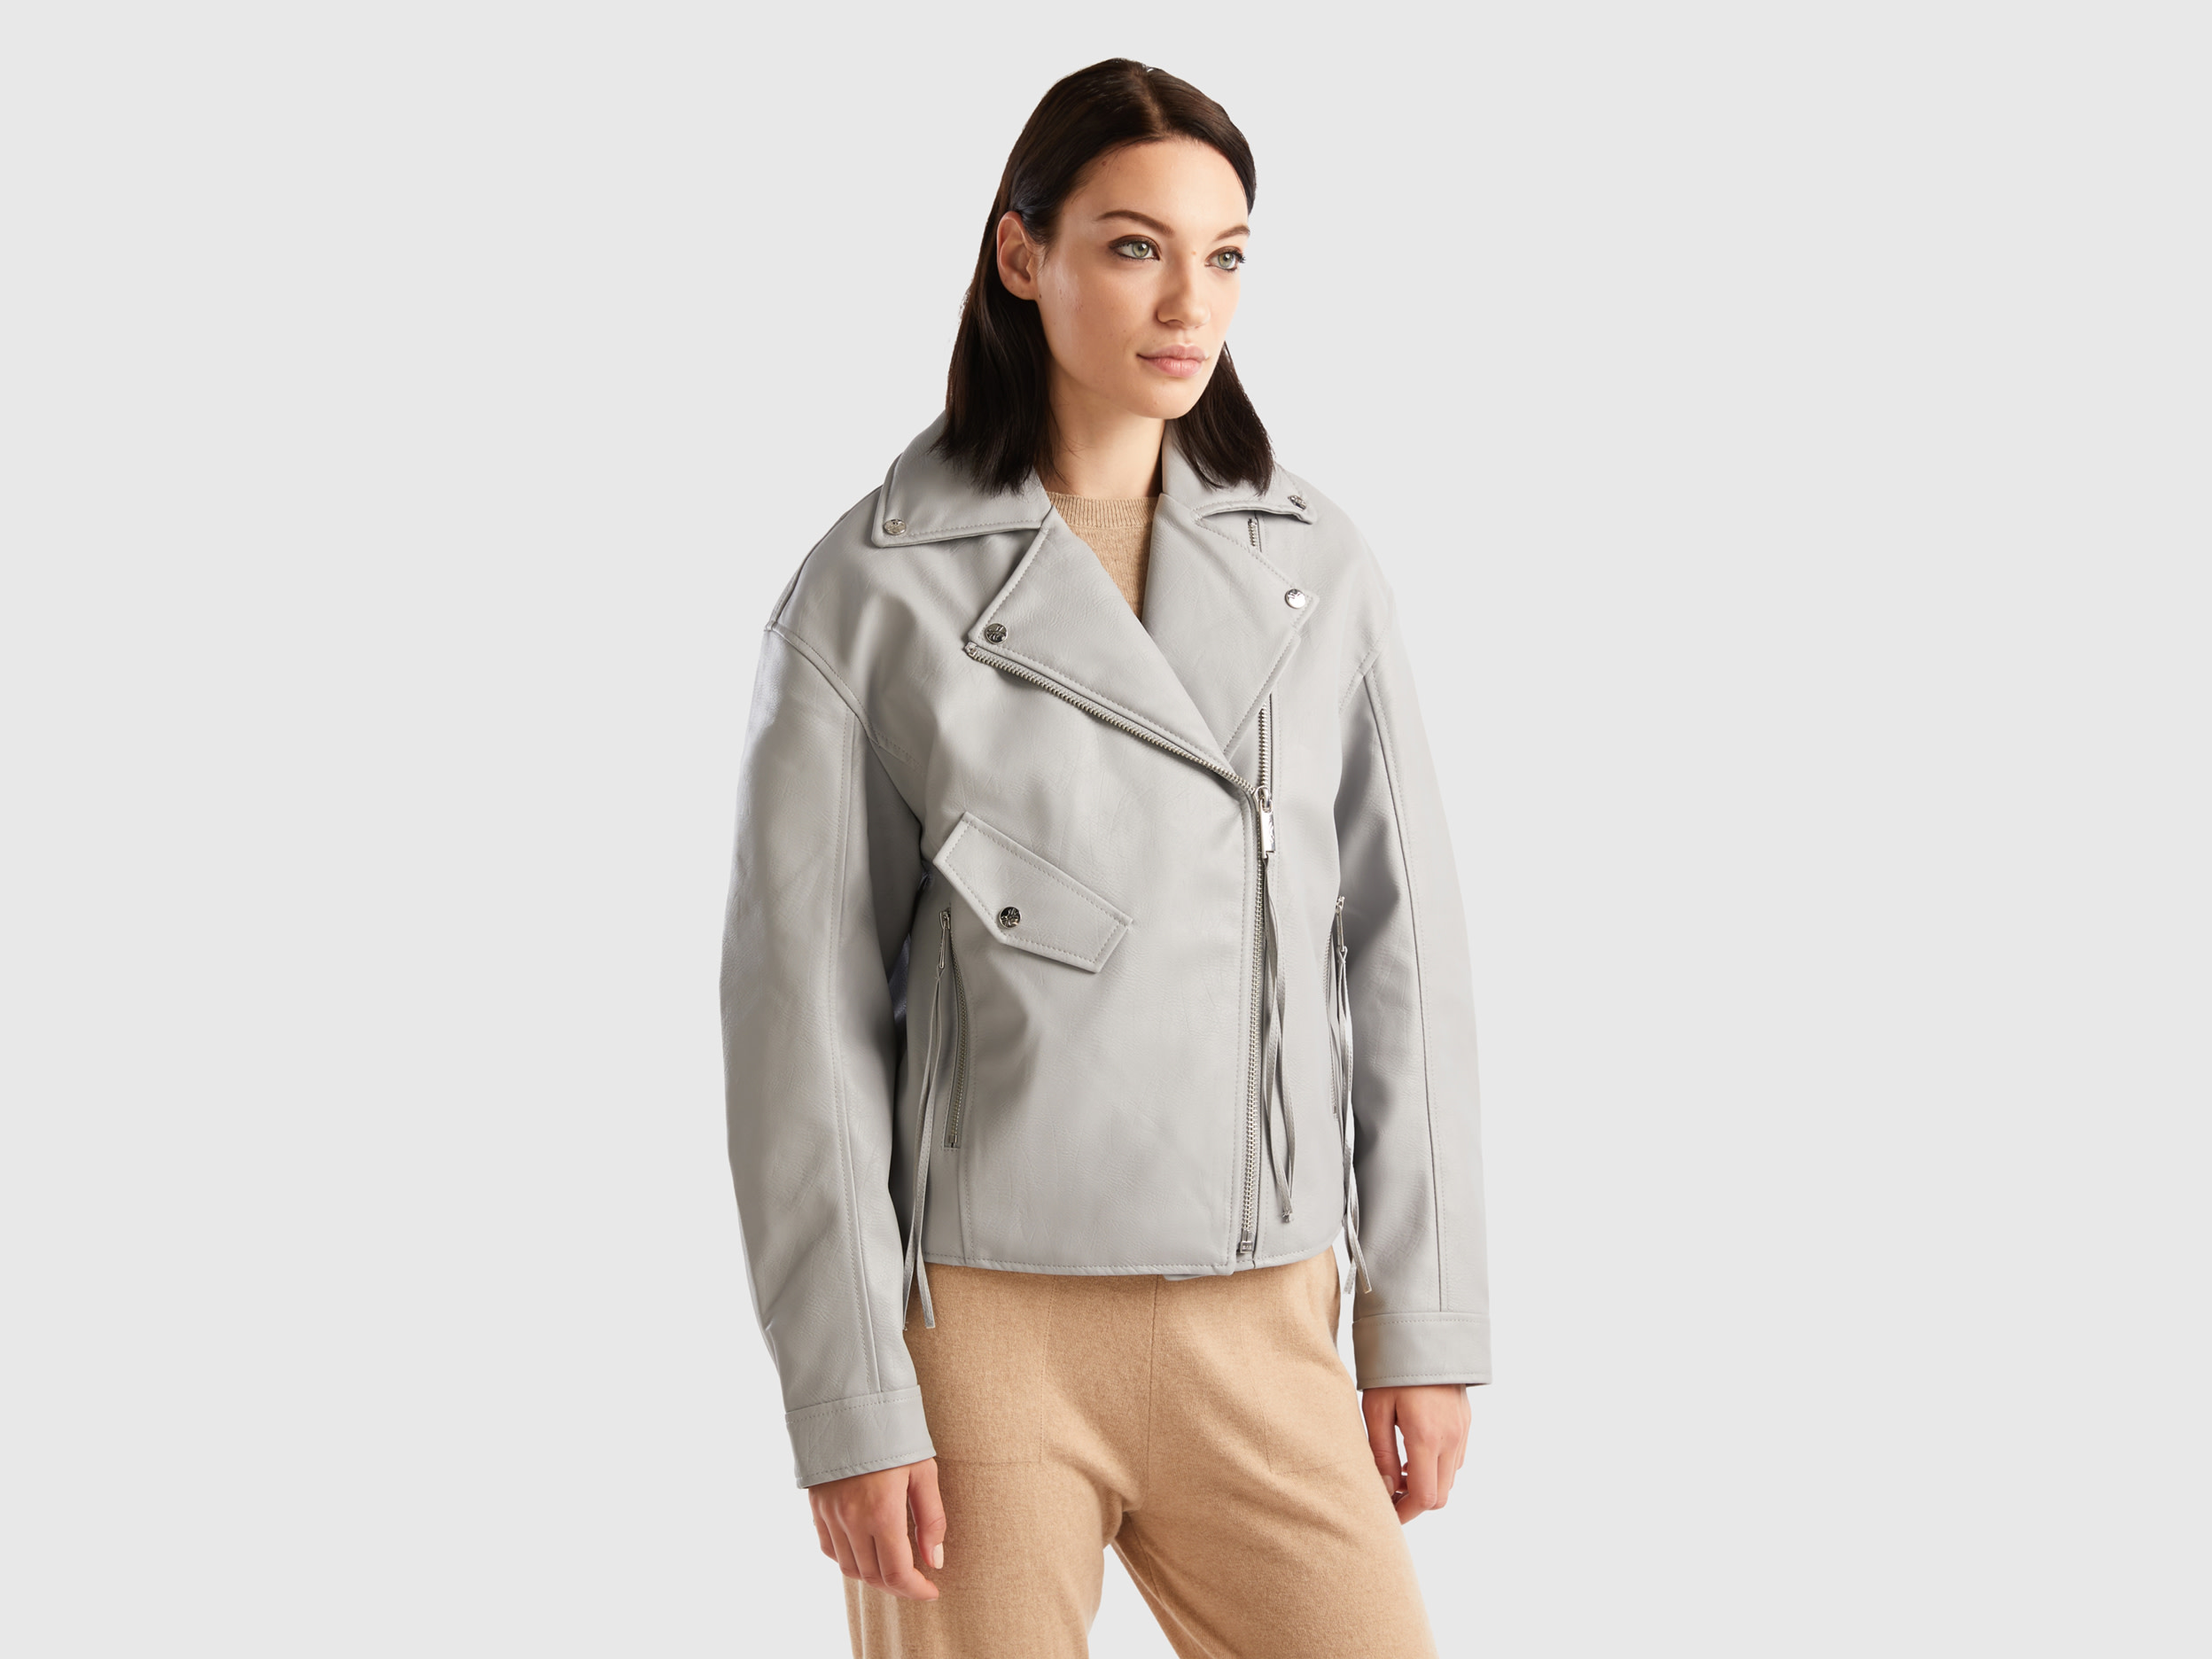 benetton, biker jacket in imitation leather, size xs, light gray, women